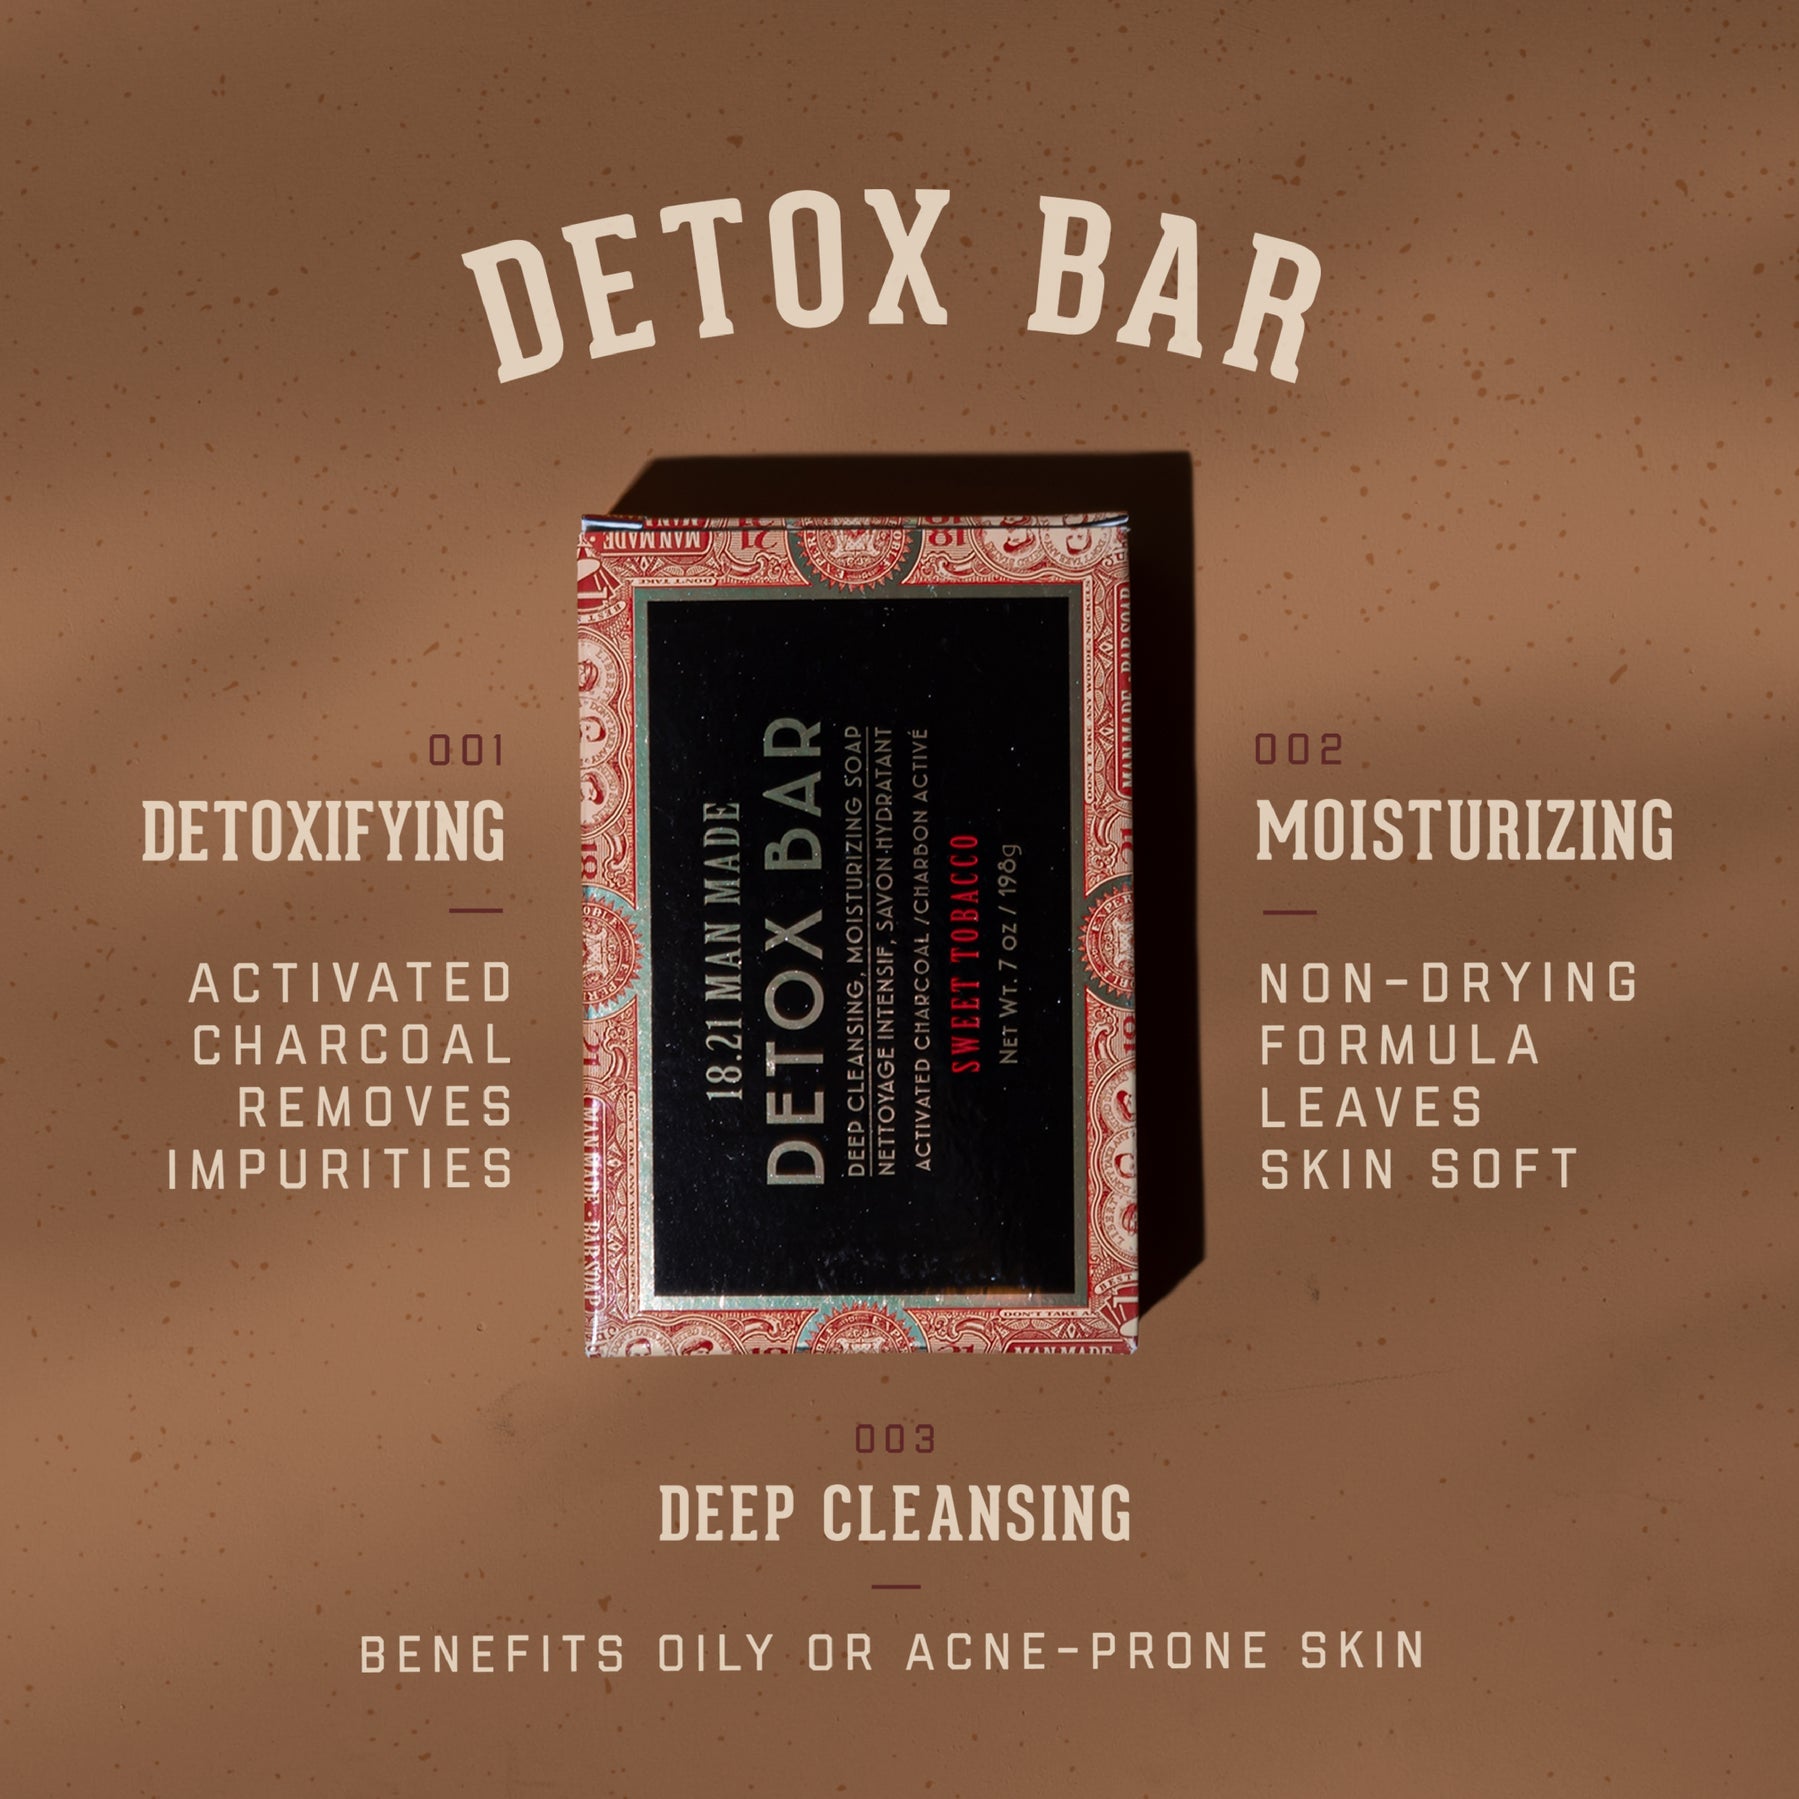 Detox Bar Soap  18.21 Man Made – 18.21 Man Made